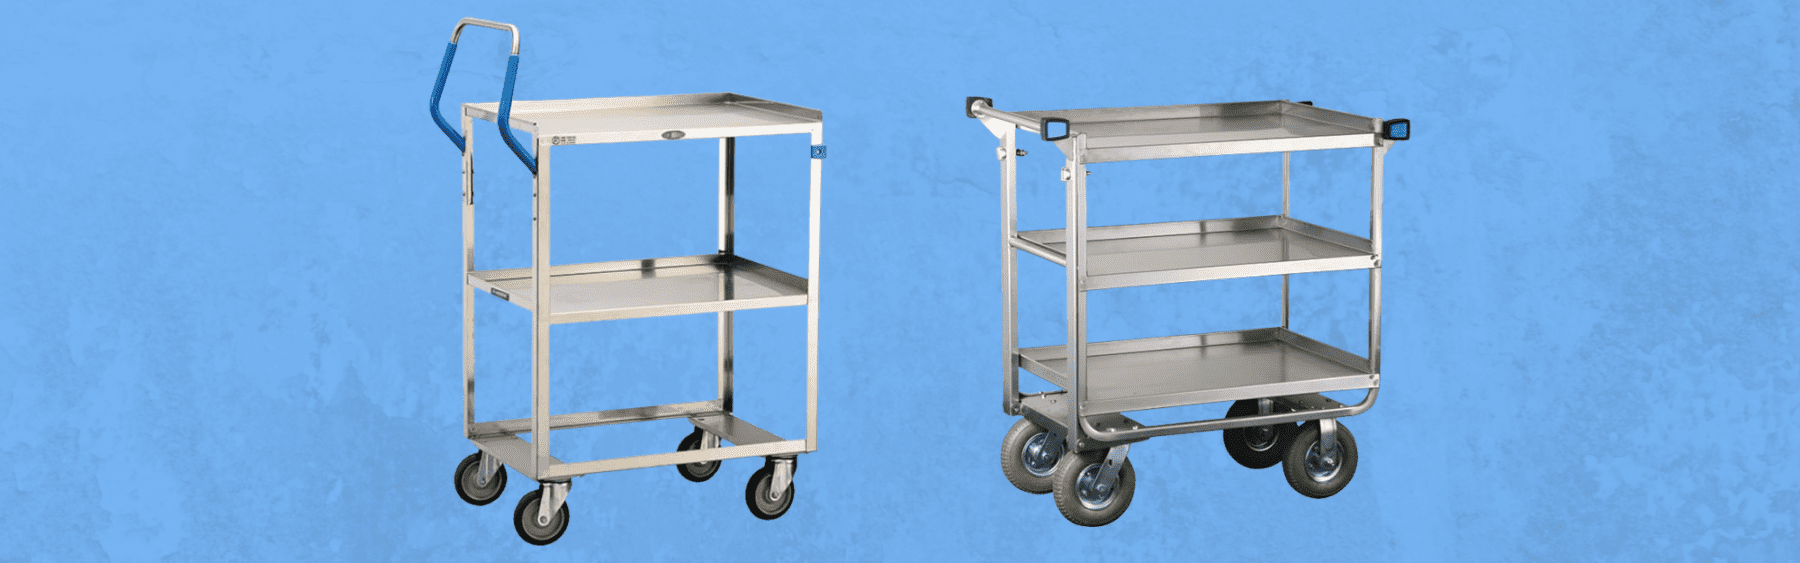 ergonomic utility carts